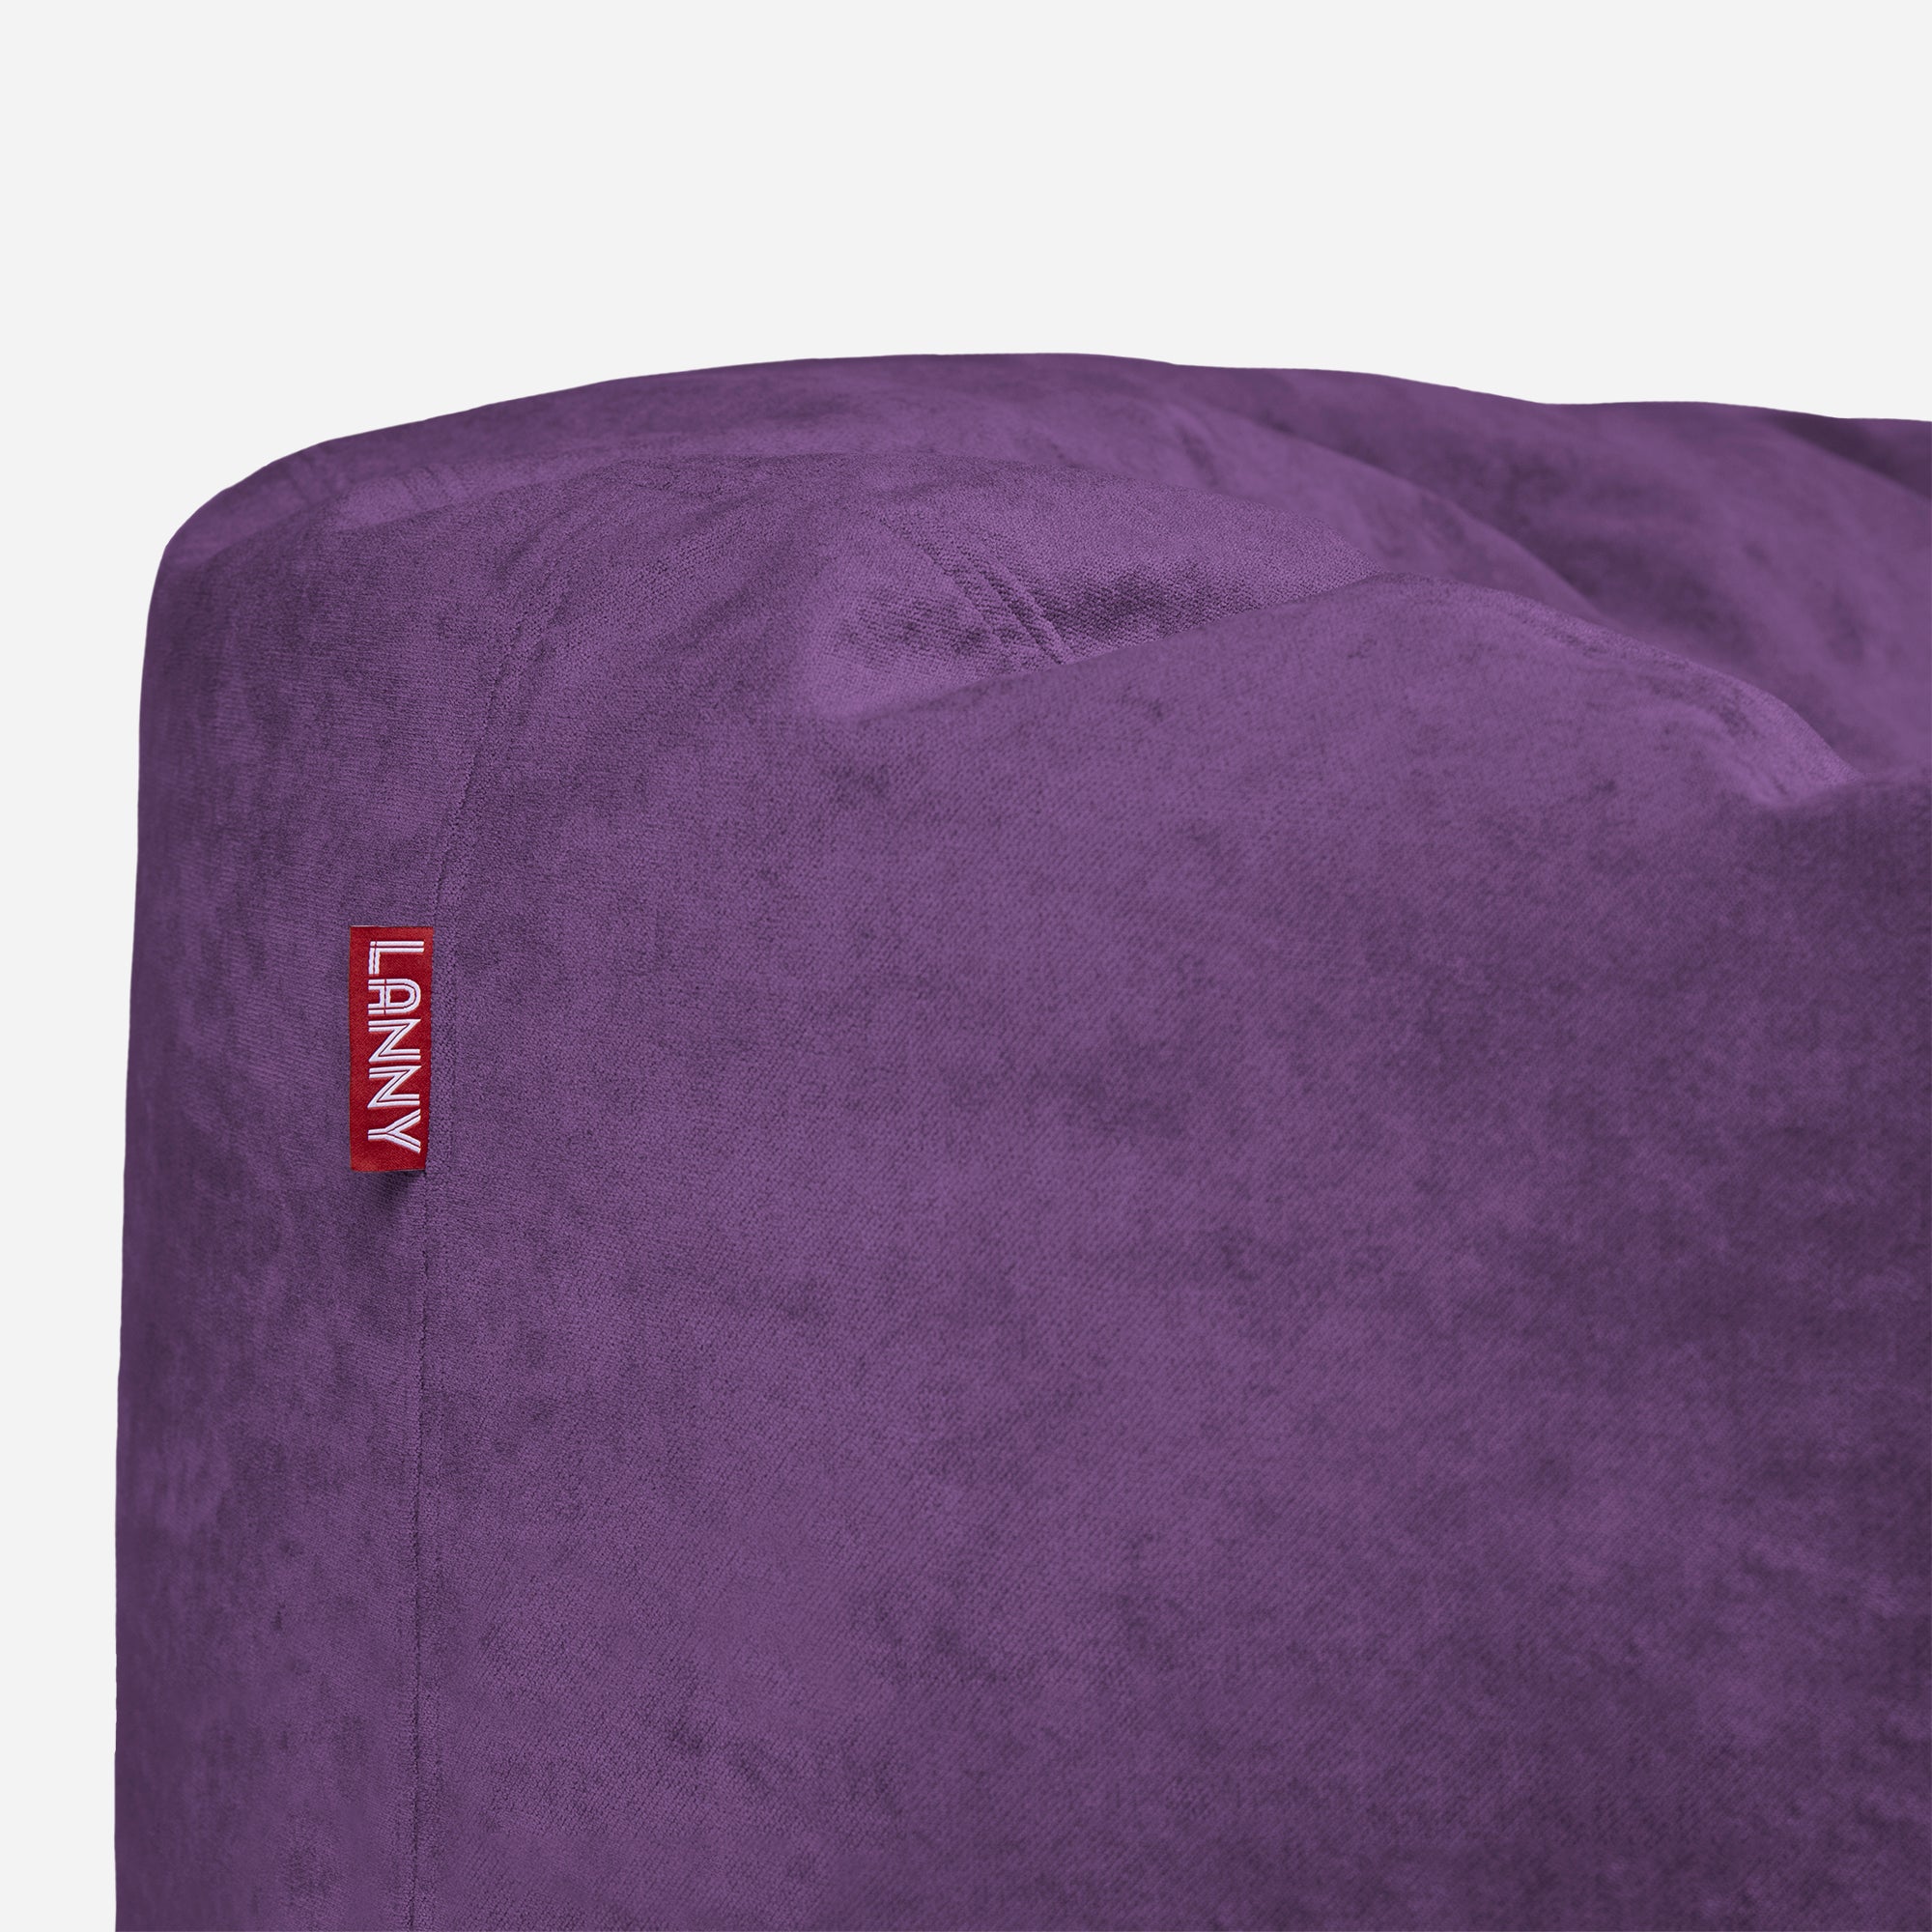 Large Original Aldo Violet Bean Bag